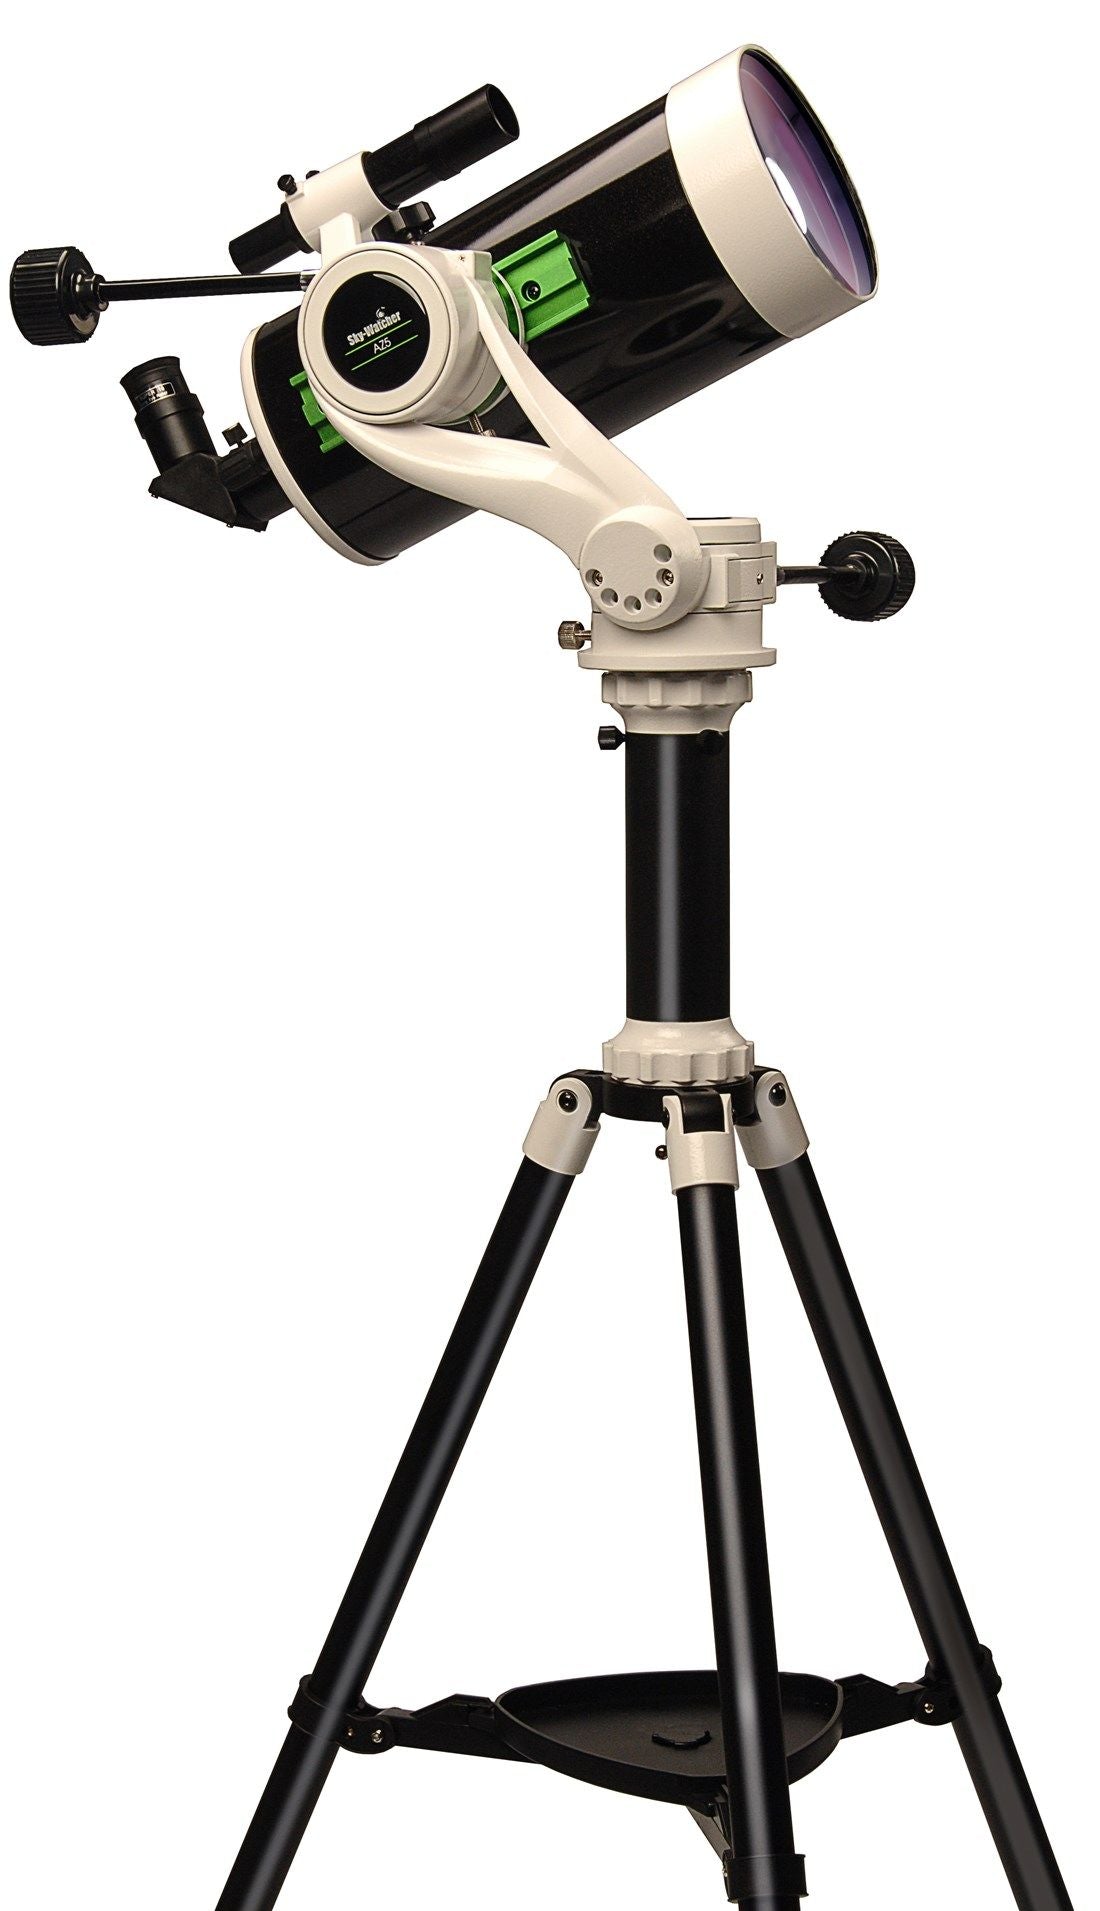 Skywatcher 127mm (5") F11 8 deluxe Alt Azimuth Maksutov -Cassegrain telescope (10262)